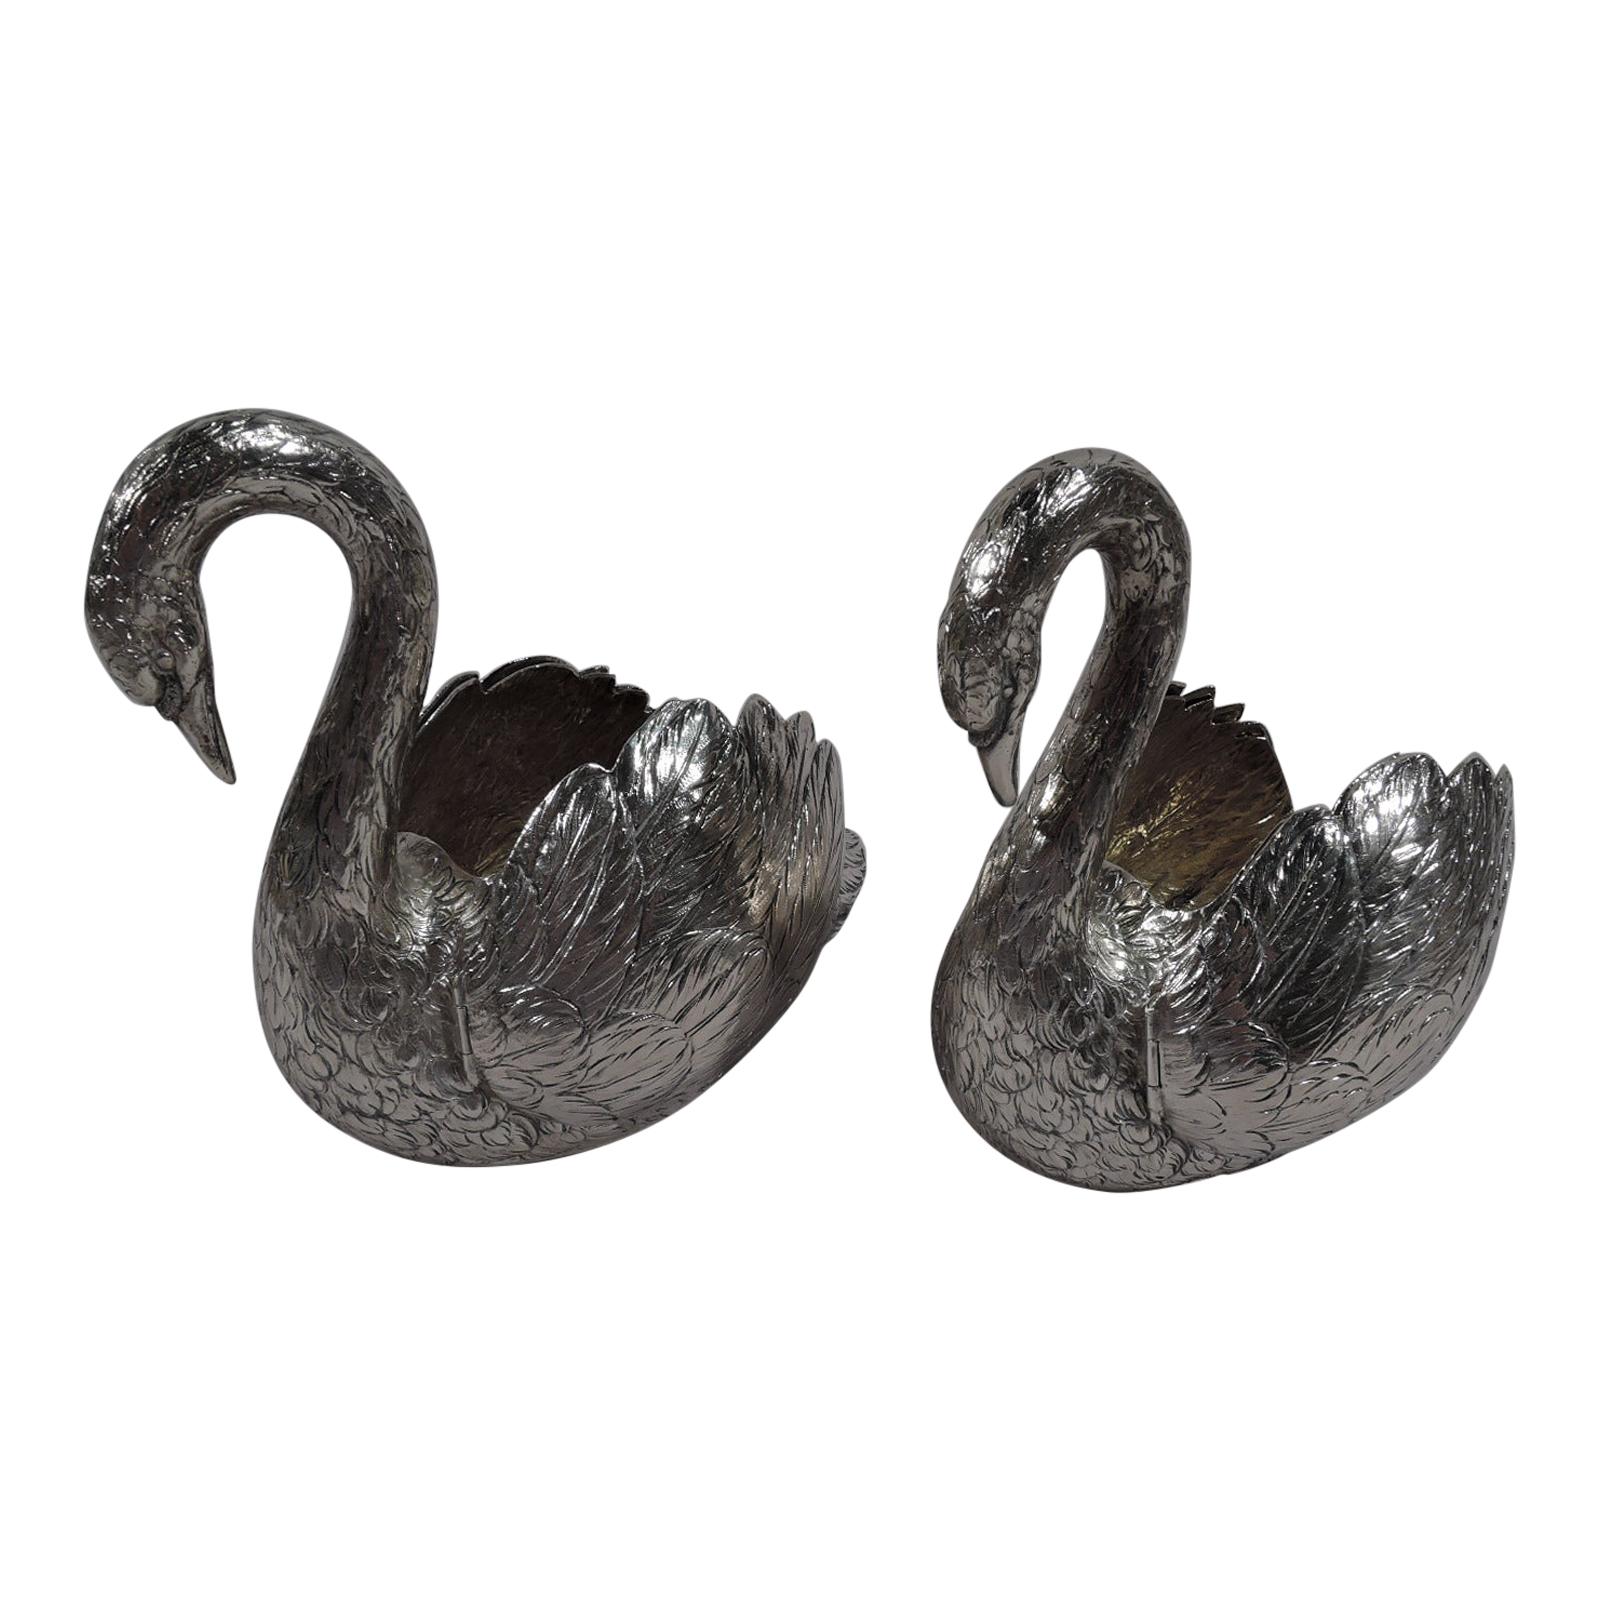 Pair of Antique German Silver Swan Bowls